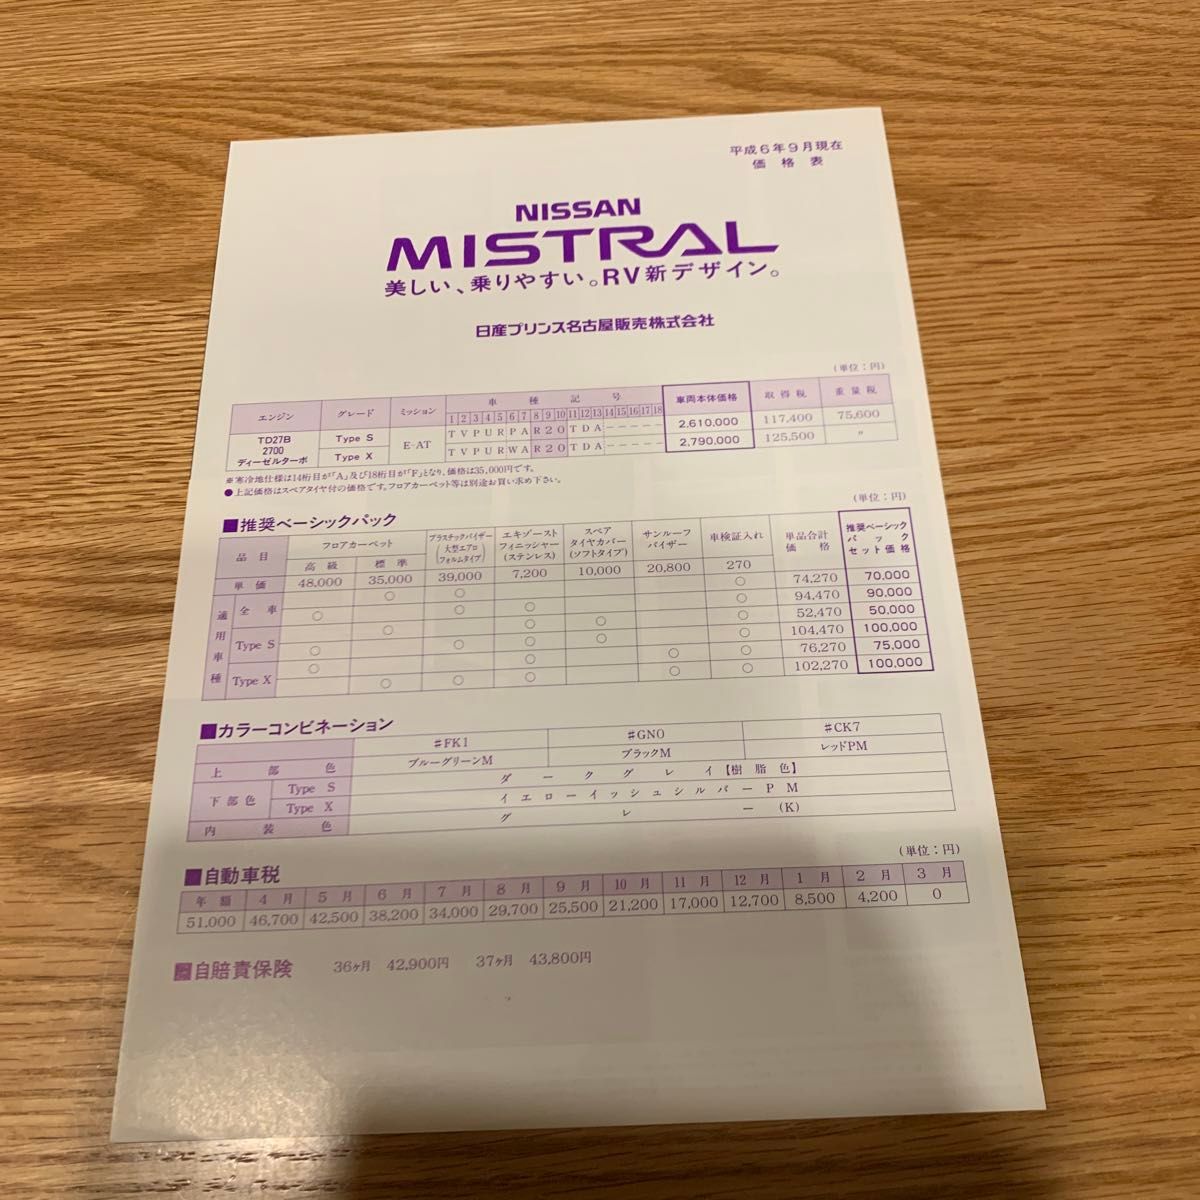 【NISSAN】ミストラル R20型前期 カタログ